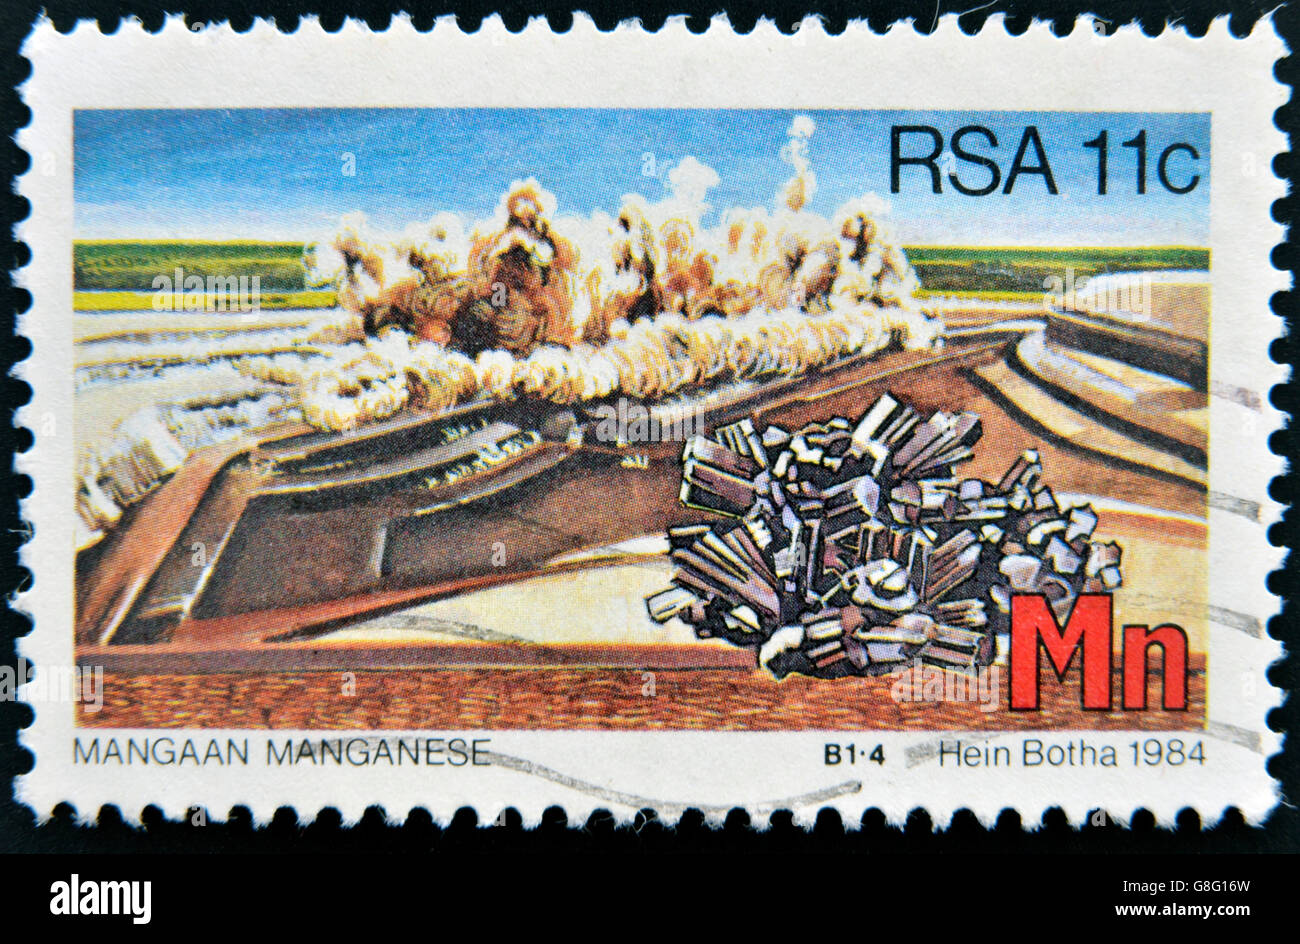 SOUTH AFRICA - CIRCA 1984: A stamp printed in RSA shows manganese, circa 1984 Stock Photo